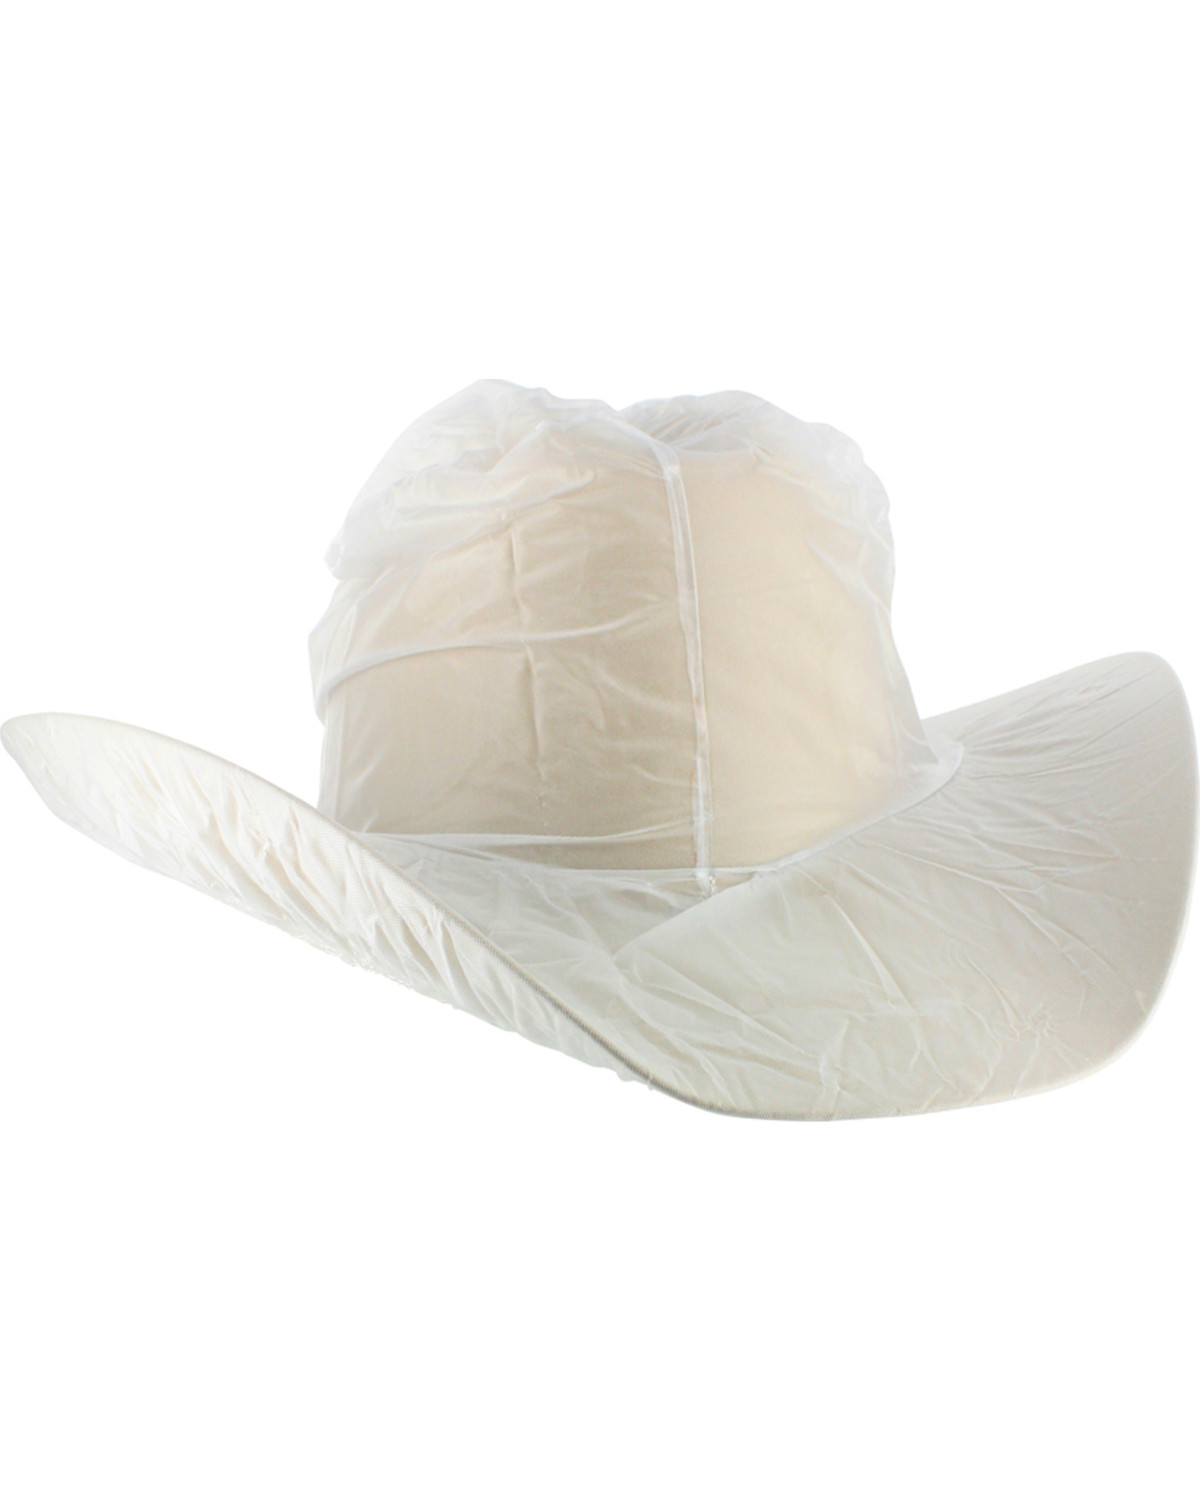 Boot Barn® Hat Protector